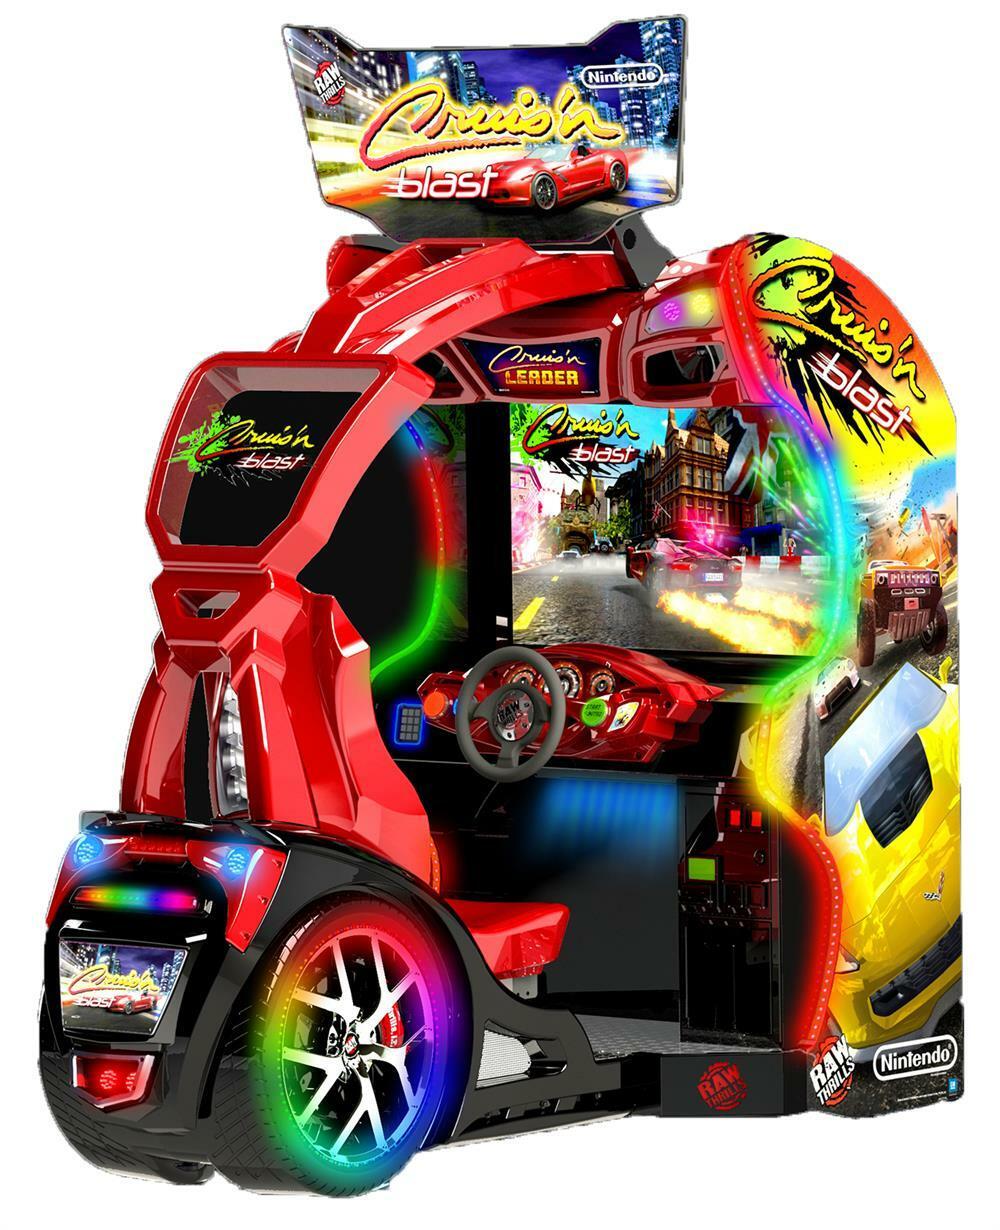 Raw Thrills Cruis’n Blast Arcade Game - Gameroom Goodies